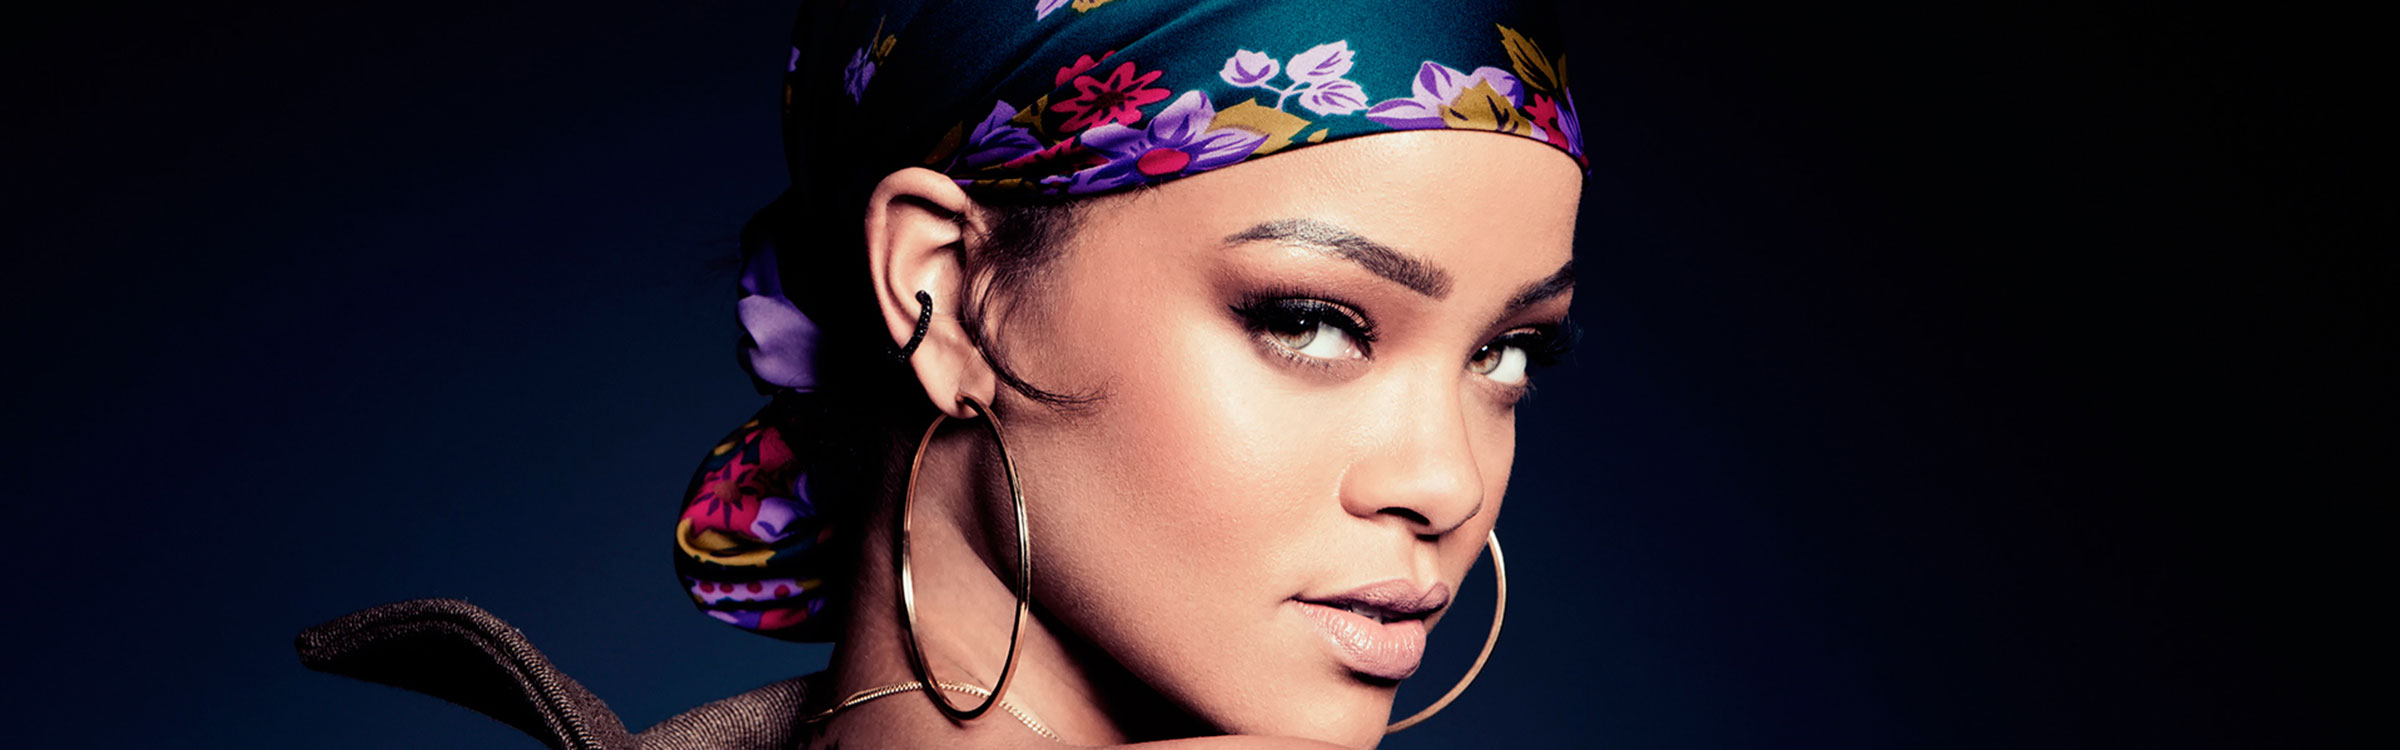 Rihanna 2015 hd